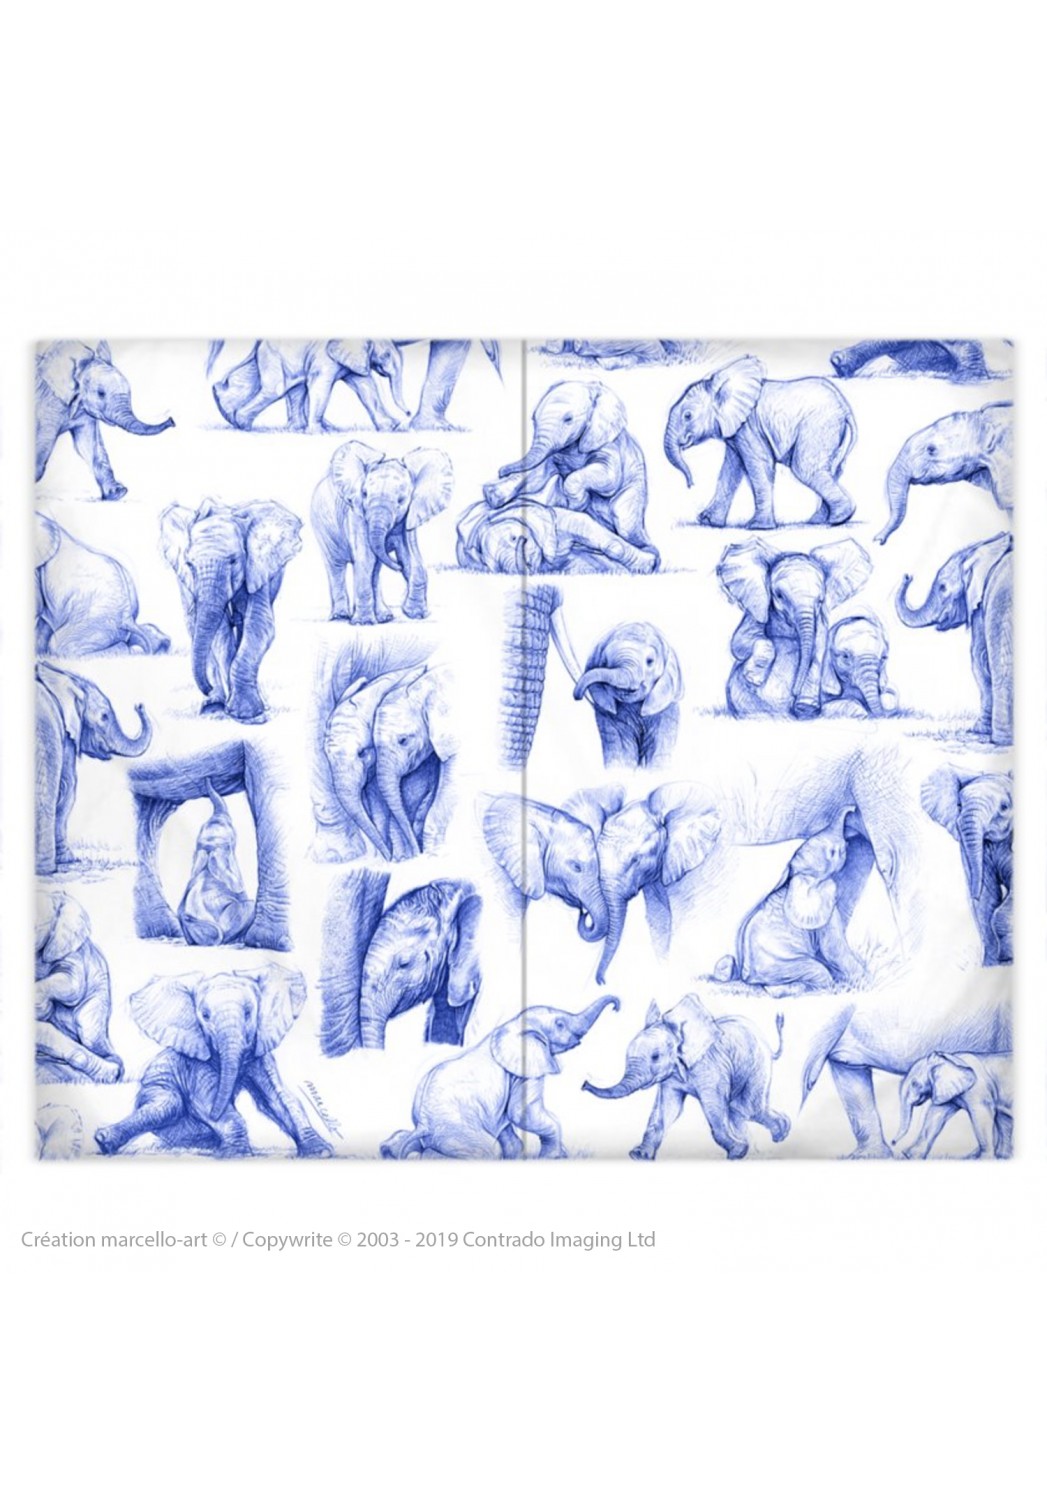 Marcello-art: Fashion accessory Duvet cover 392 elephant patchwork ballpoint pen